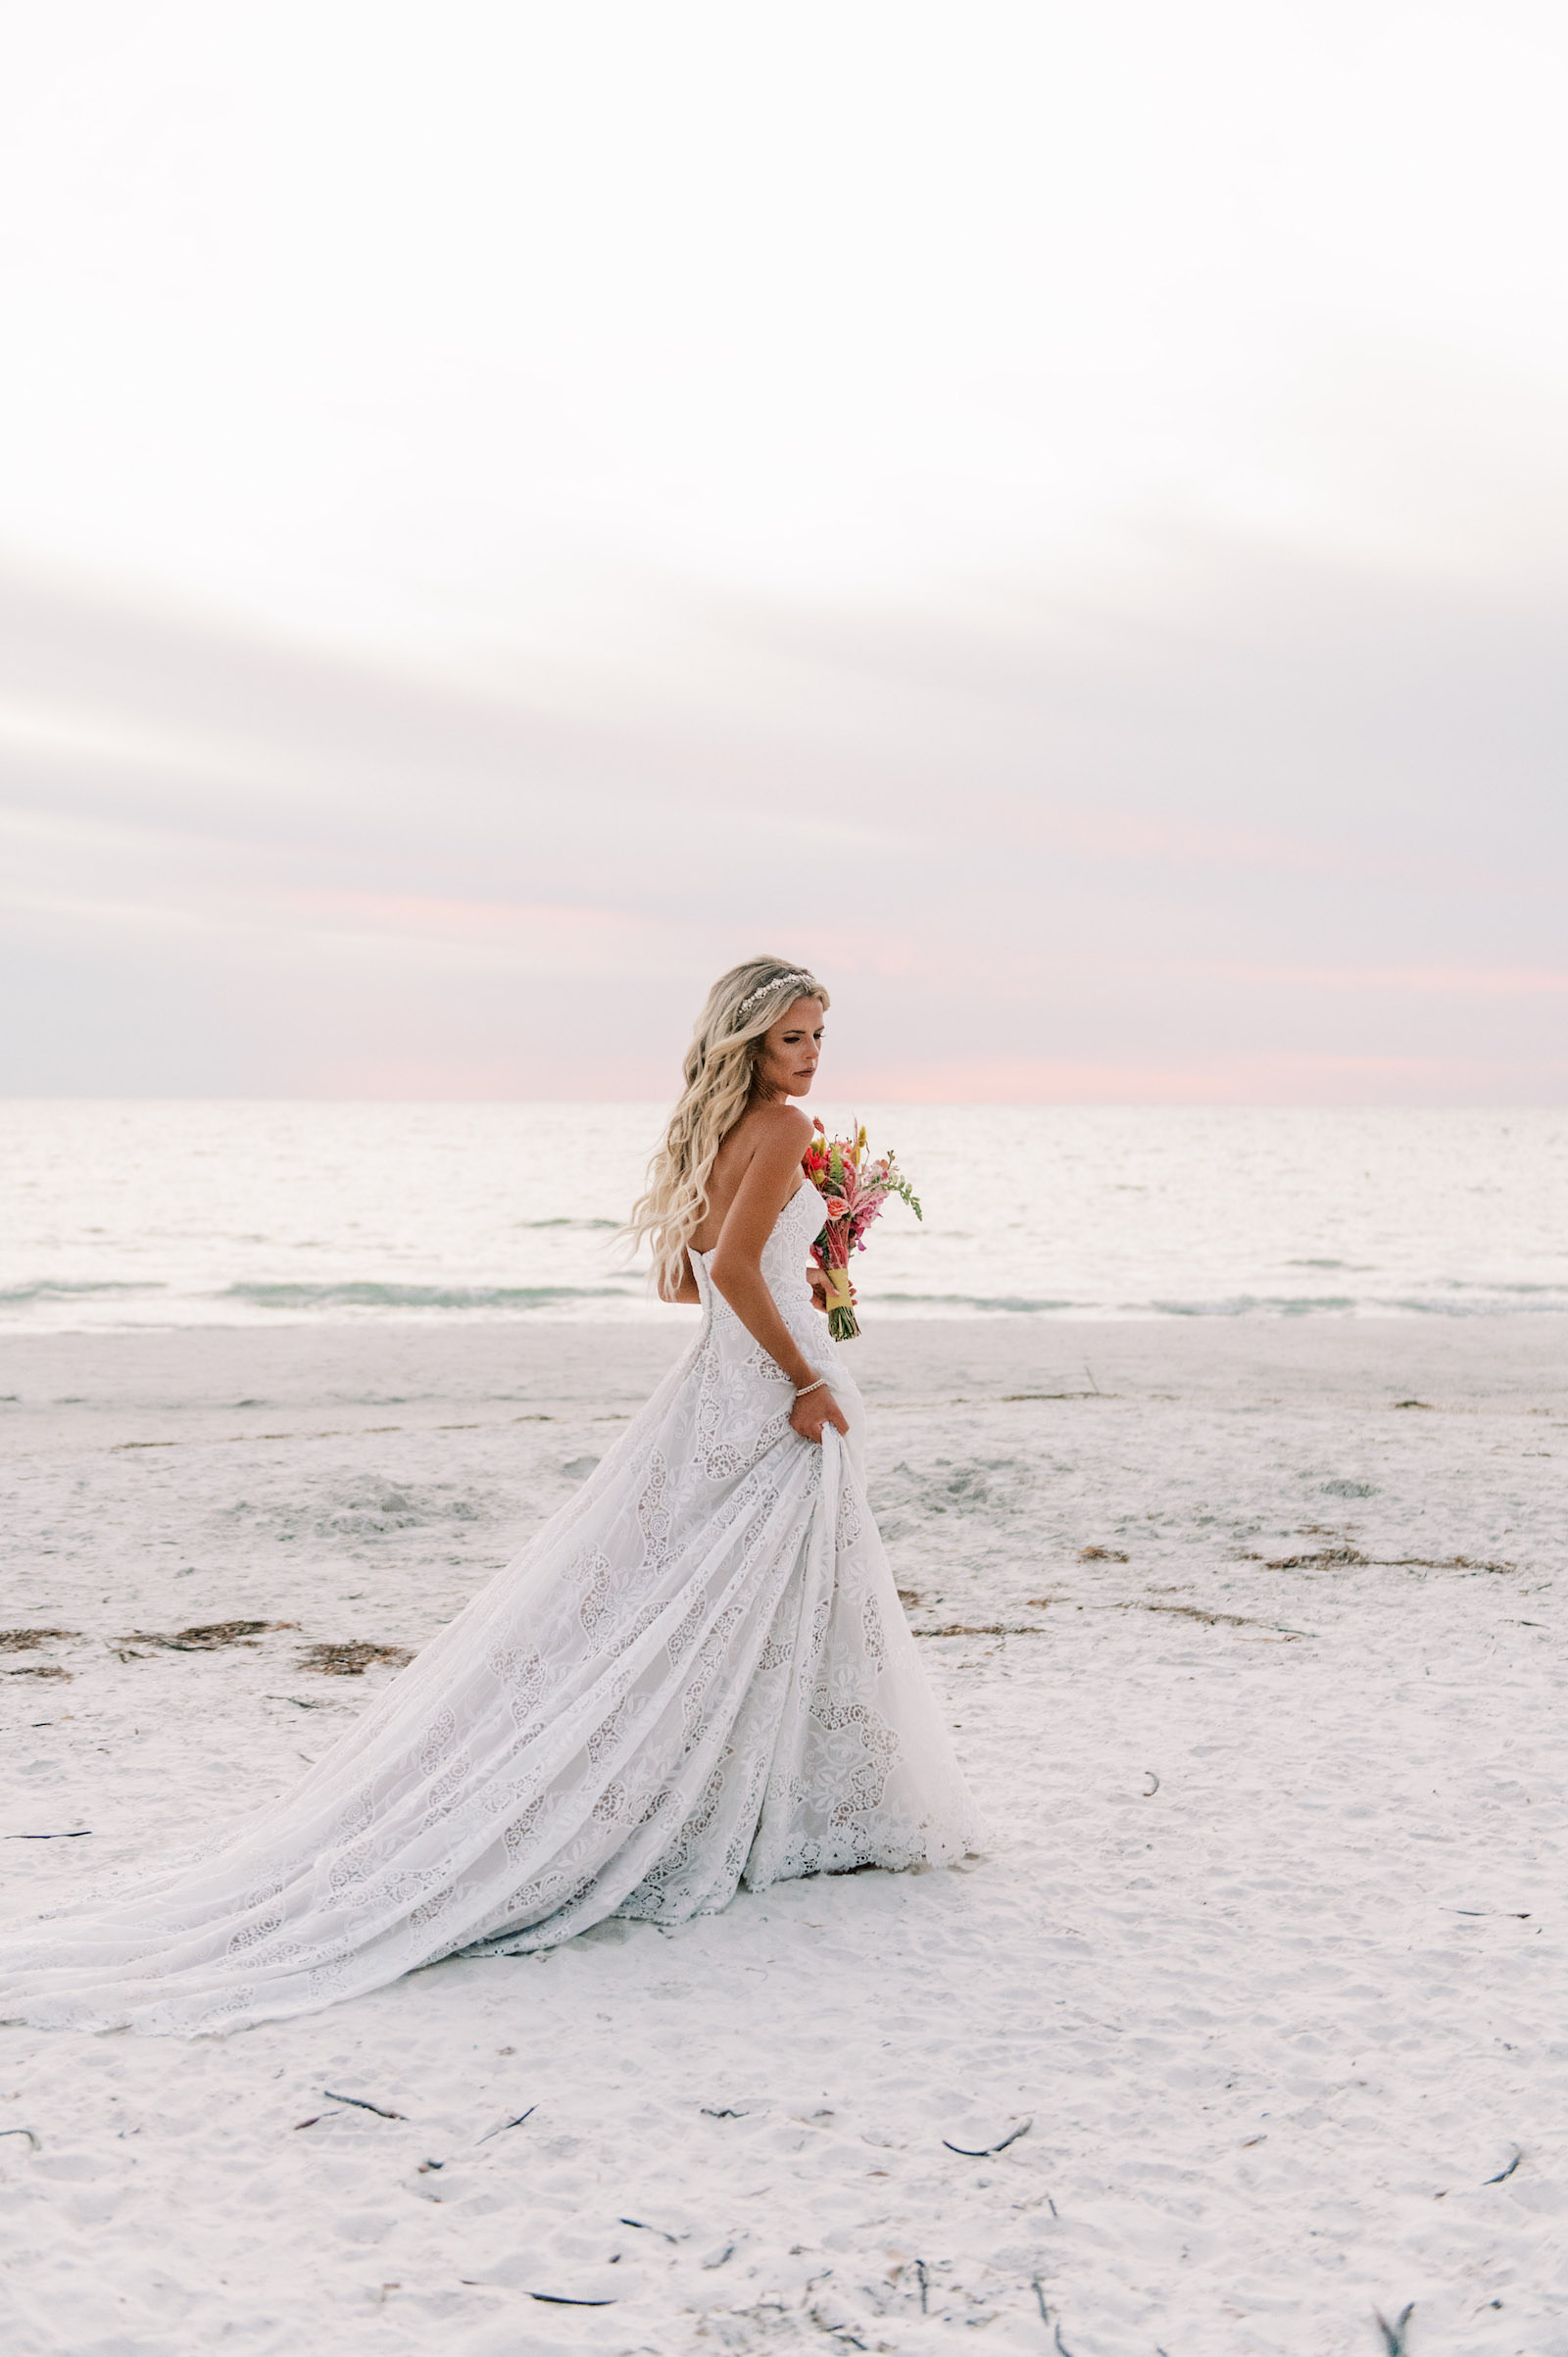 Vibrant Boho Bride Walking on Beach During Sunset | Tampa Bay Wedding Hair and Makeup Femme Akoi Beauty Studio